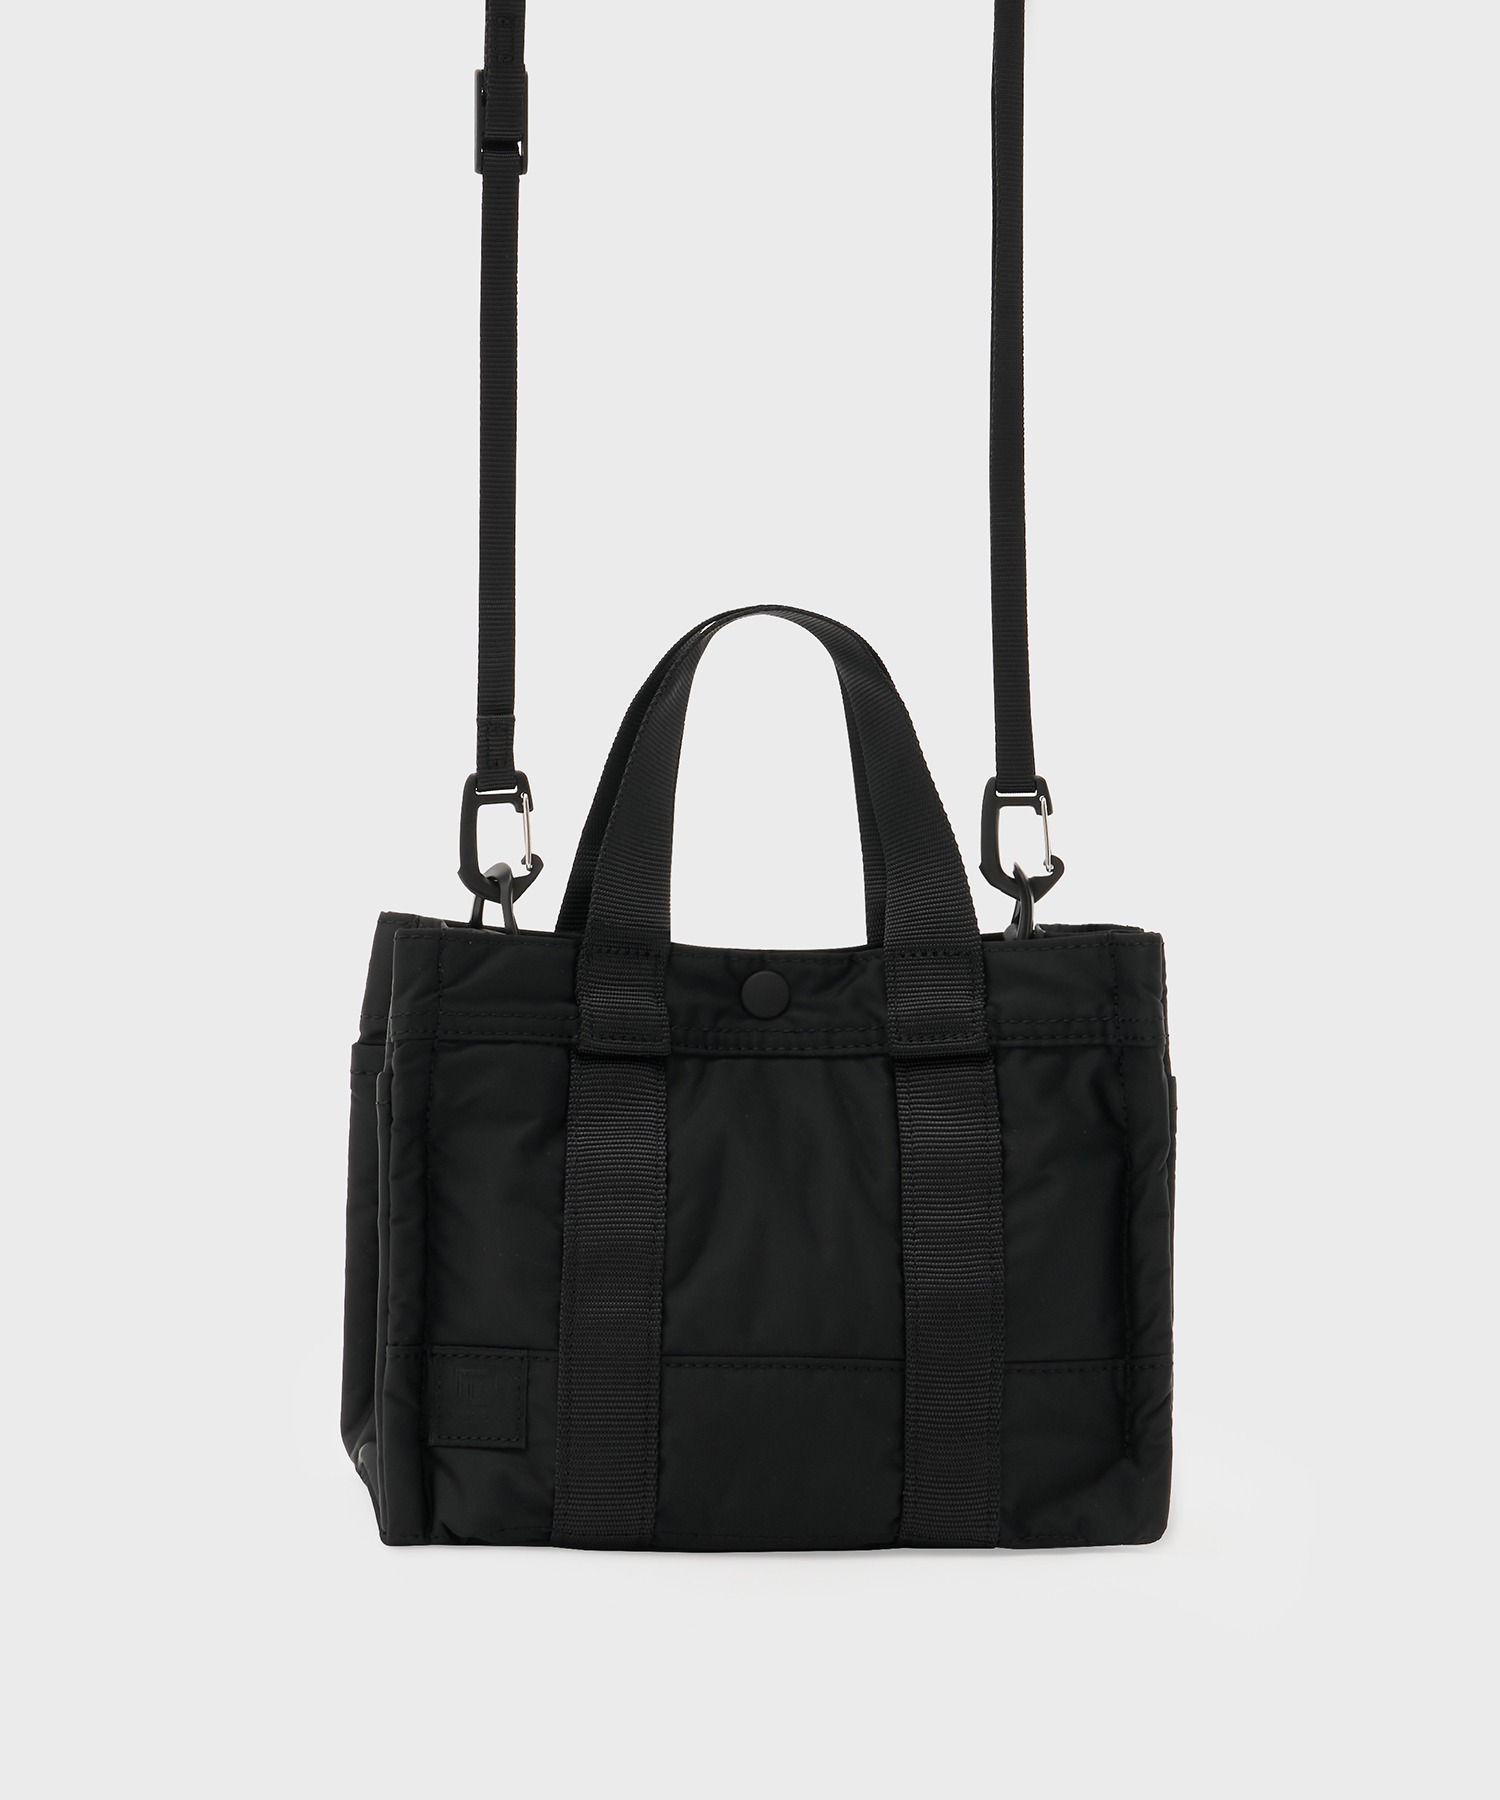 Black Beauty 2Way Tote Bag XS (Black)